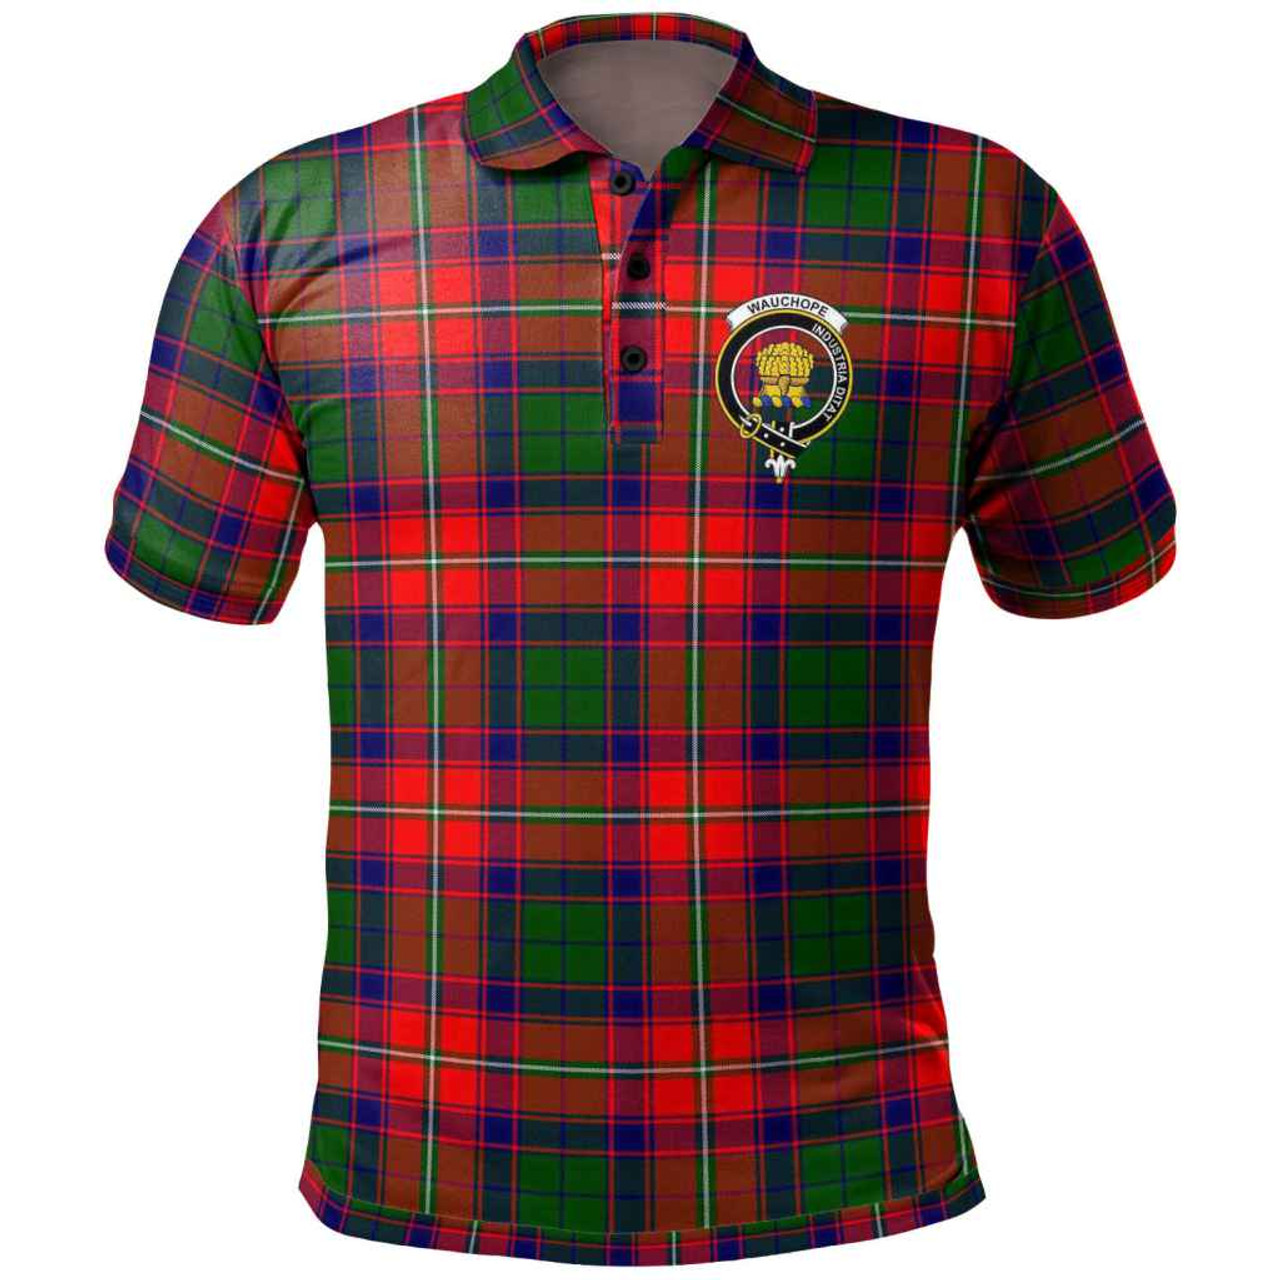 Scottish Wauchope (or Waugh) Clan Crest Tartan Polo Shirt